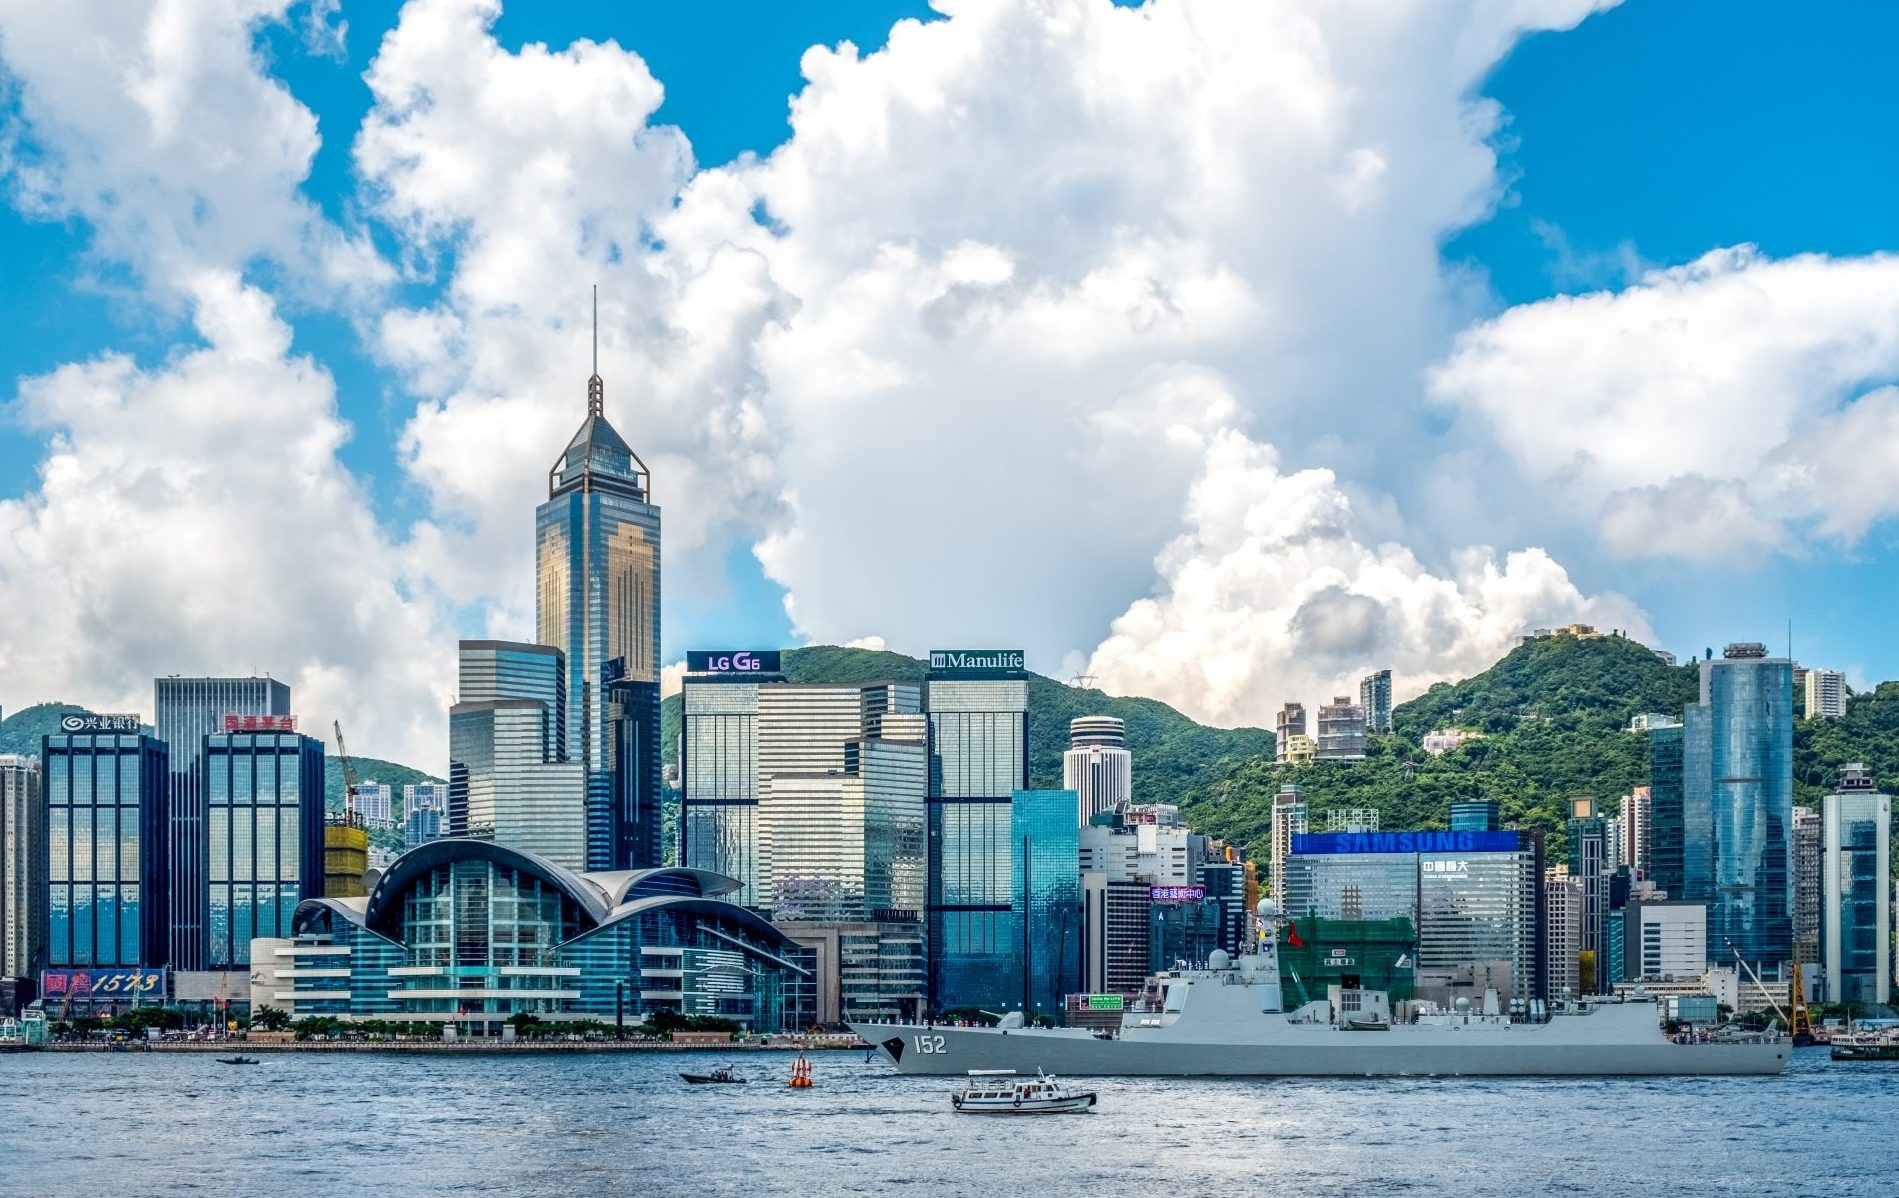 Hong Kong Victoria Harbour. Photo: EarnestTse/Shutterstock